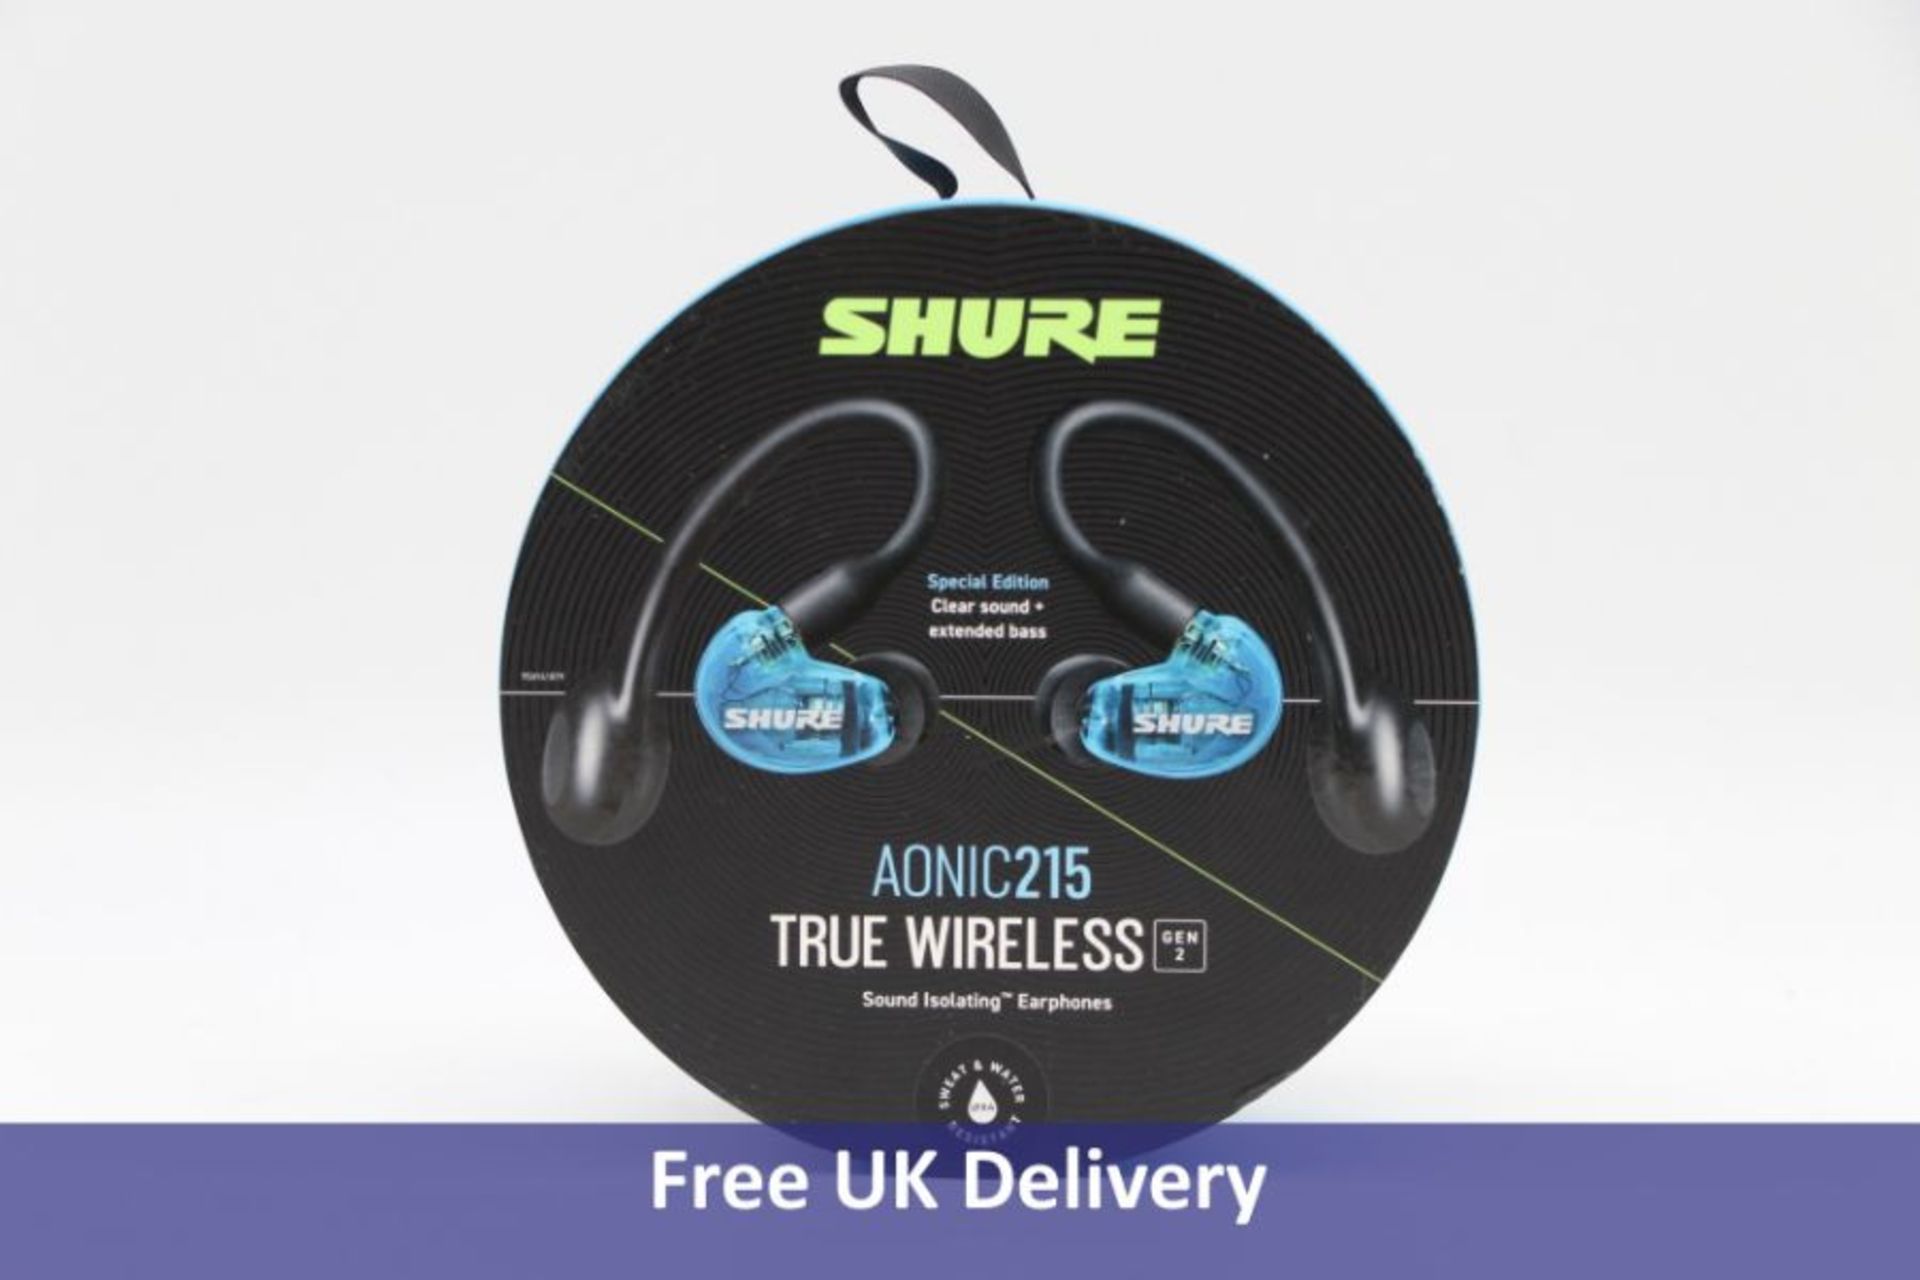 Three Shure A0nic215 True Wireless Earphones, Black/Blue - Image 2 of 3